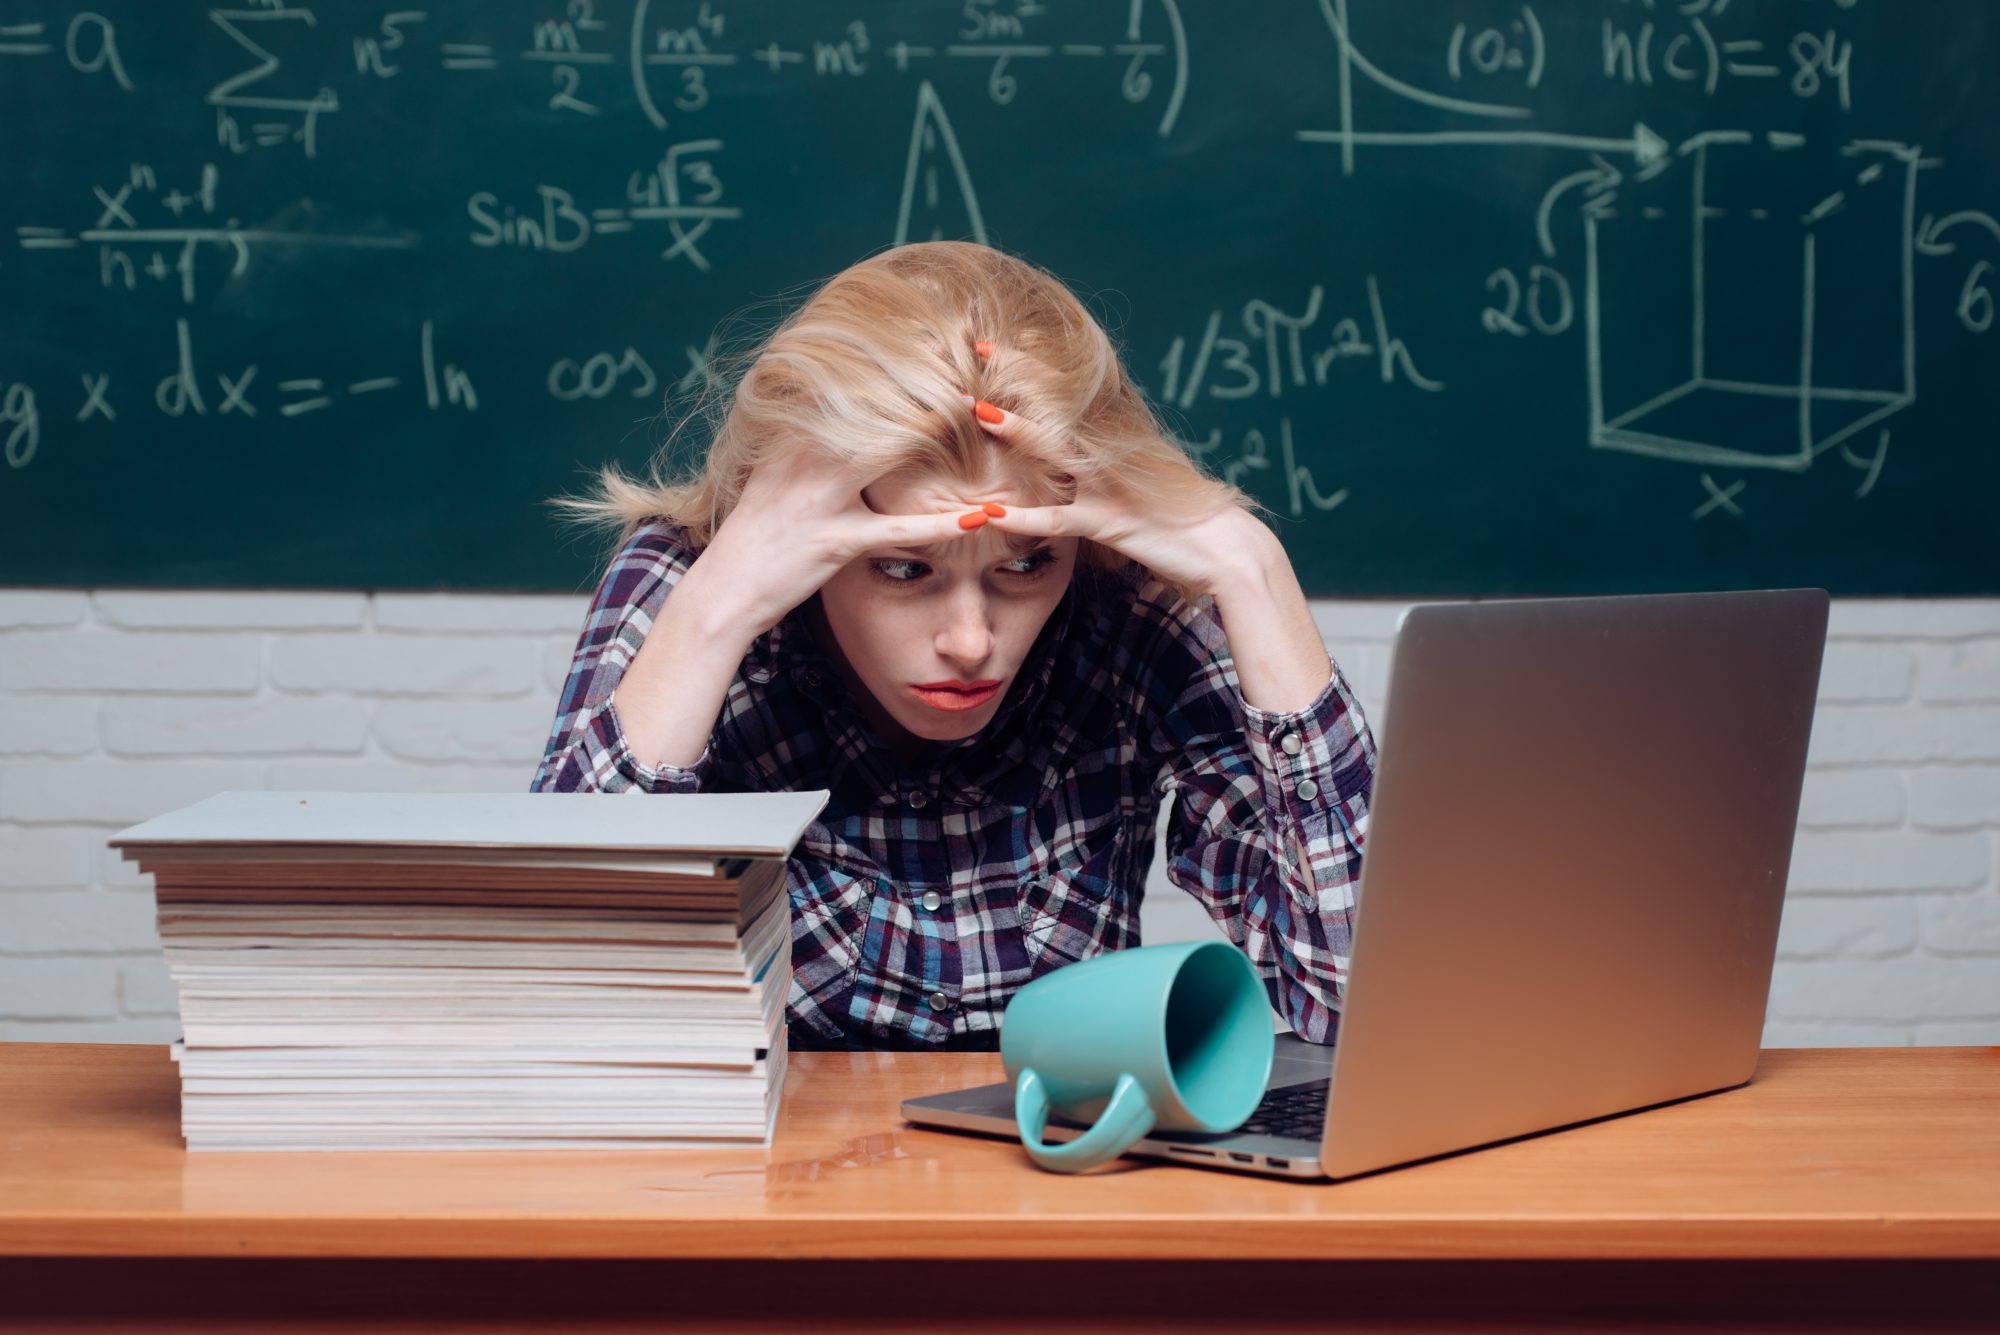 What causes teacher burnout?